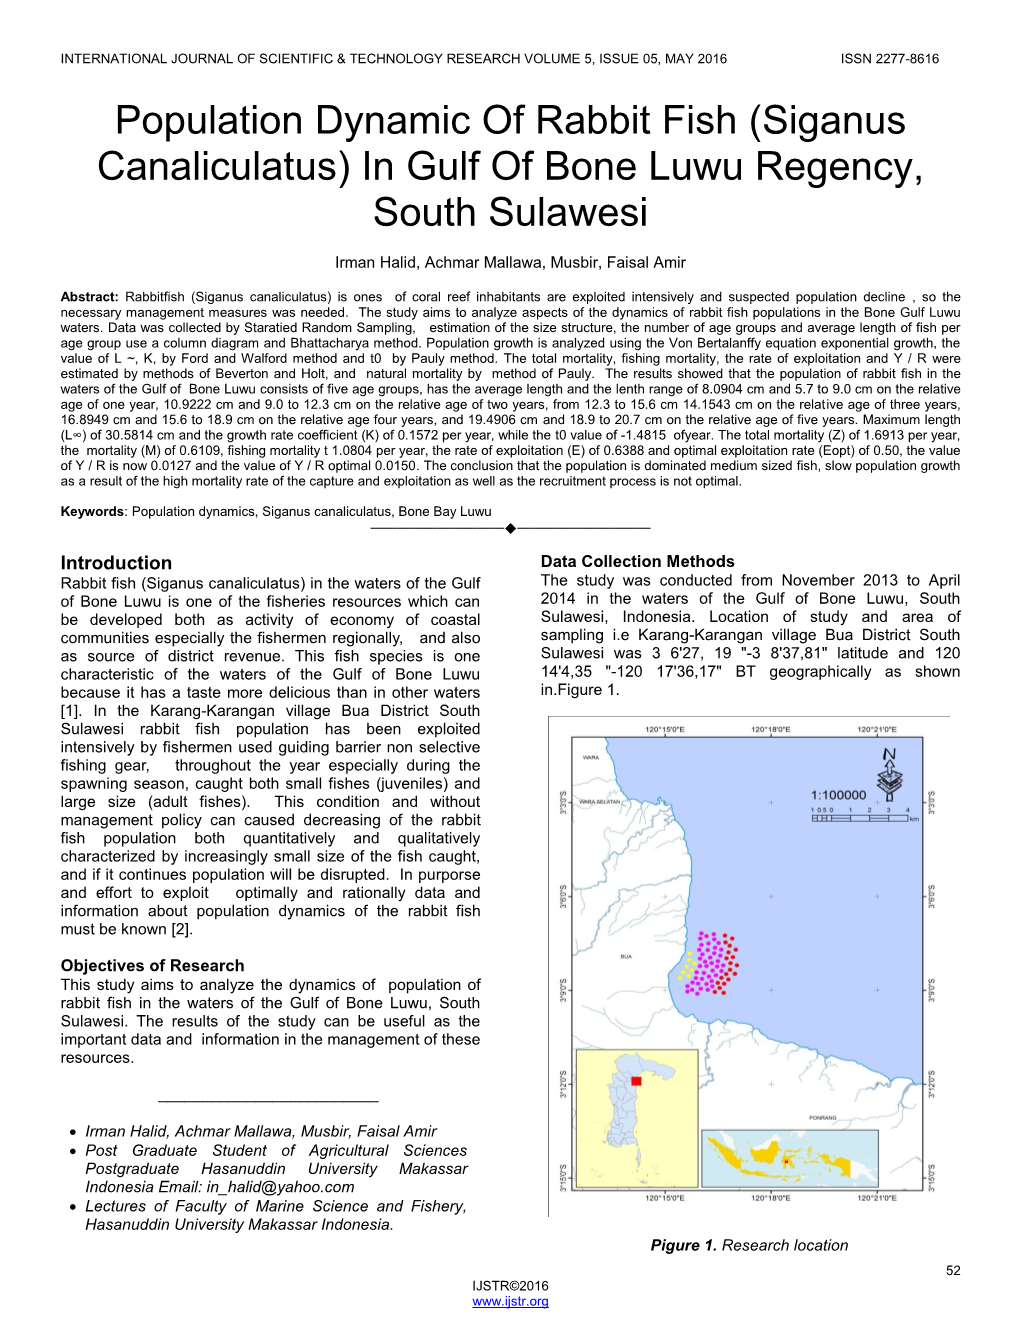 Population Dynamic of Rabbit Fish (Siganus Canaliculatus) in Gulf of Bone Luwu Regency, South Sulawesi